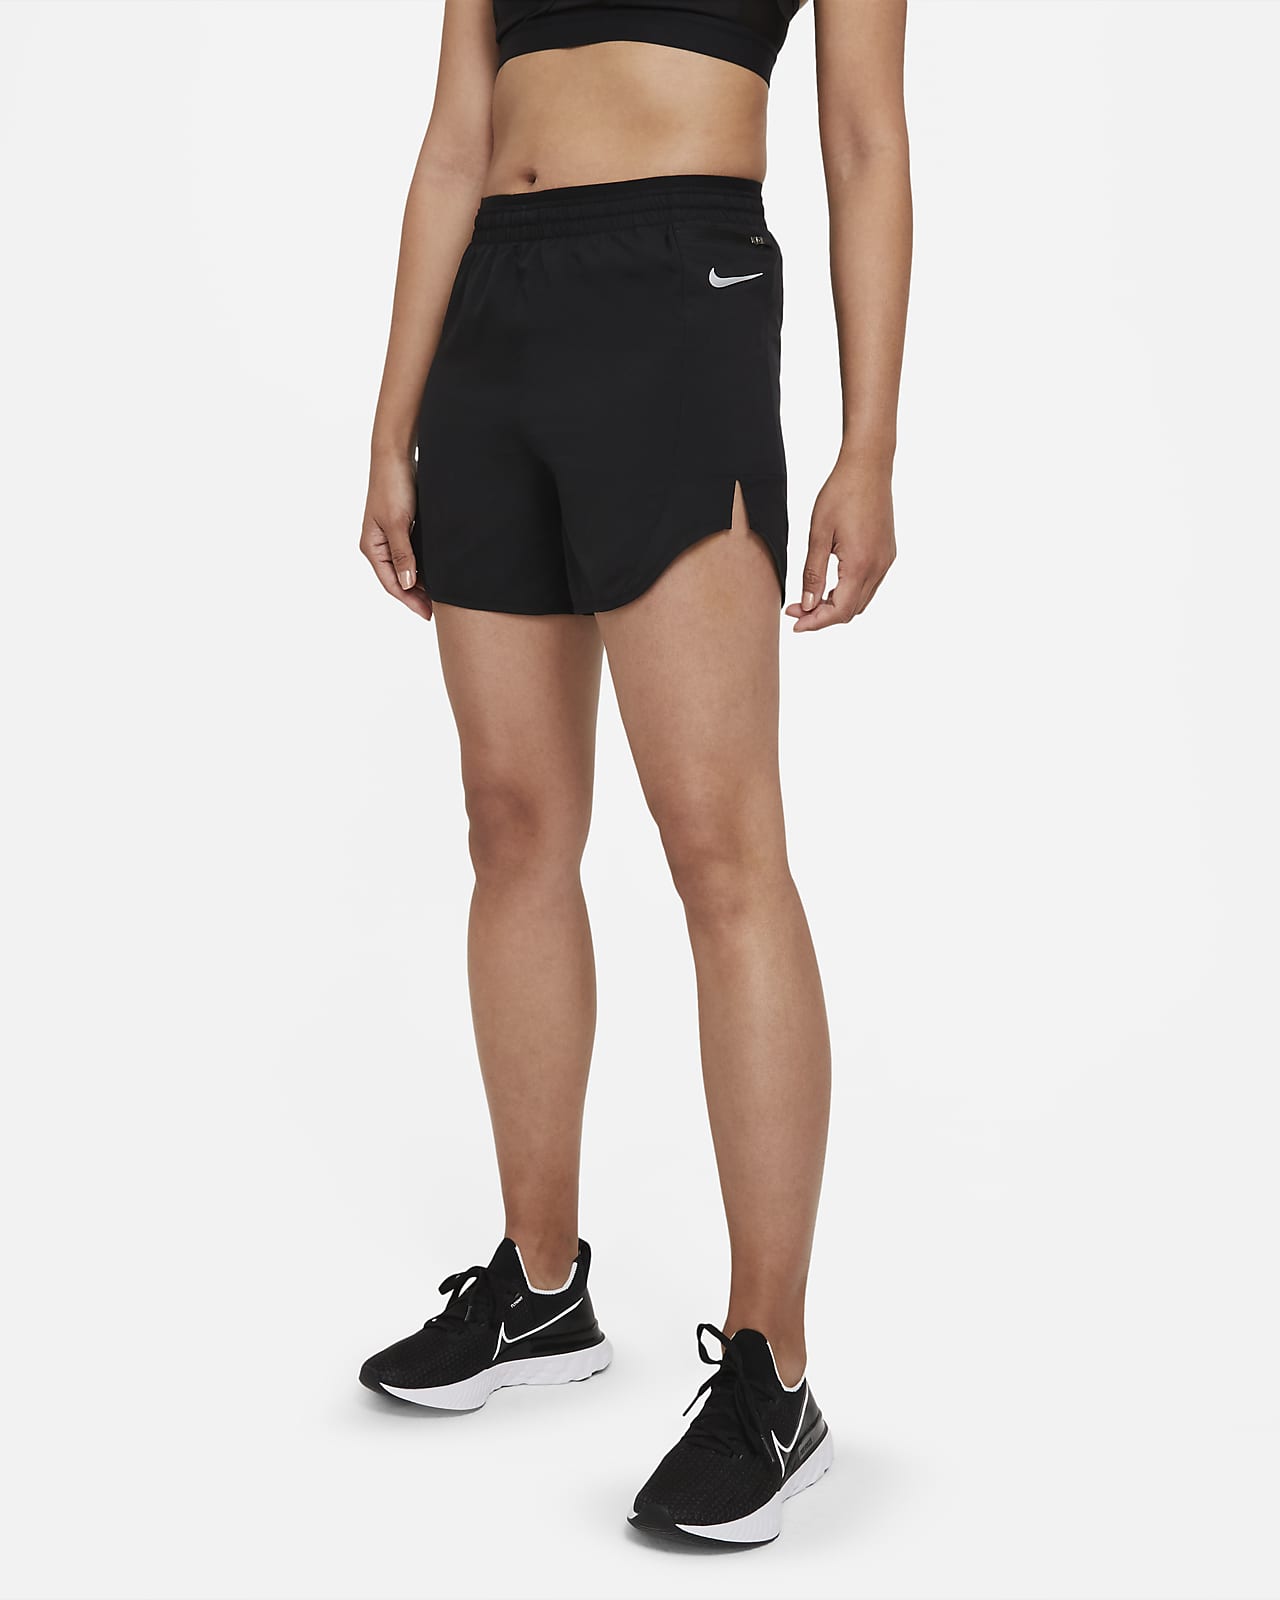 nike womens running shorts black